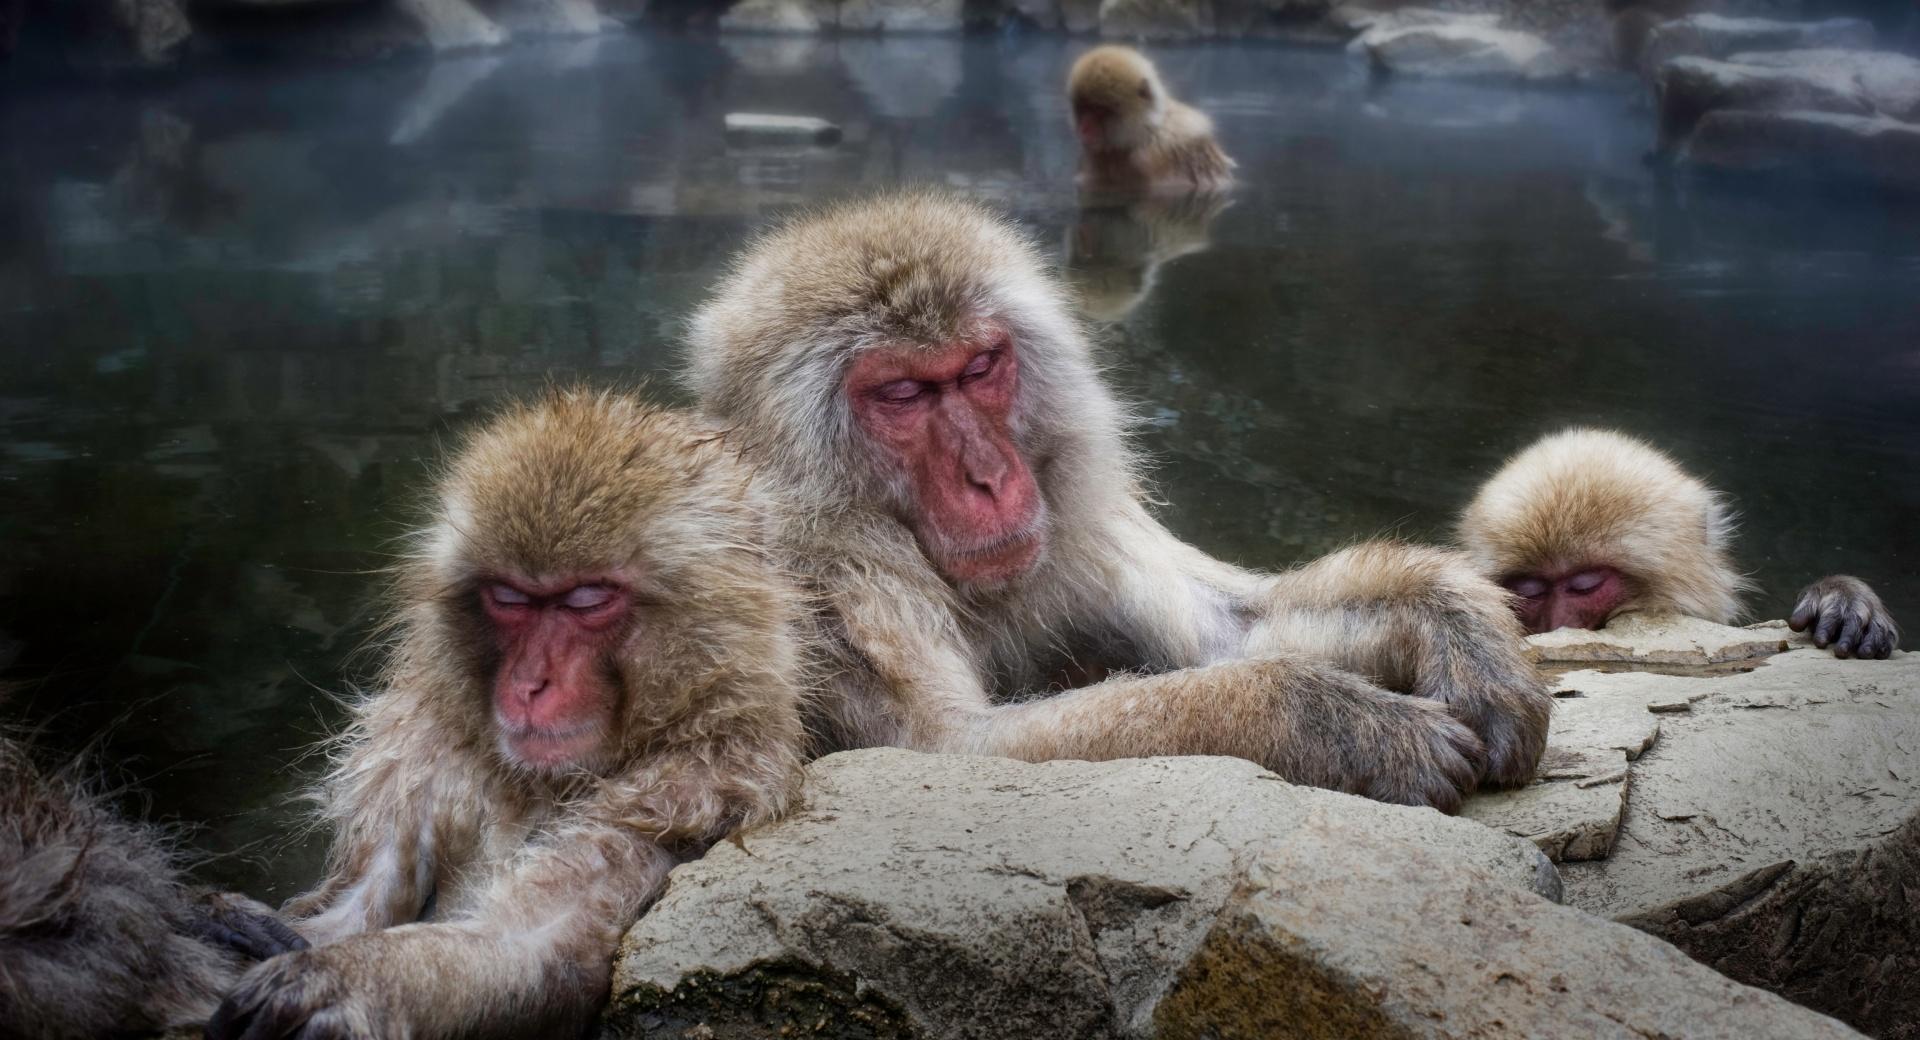 Sleeping Snow Monkeys at 1024 x 1024 iPad size wallpapers HD quality